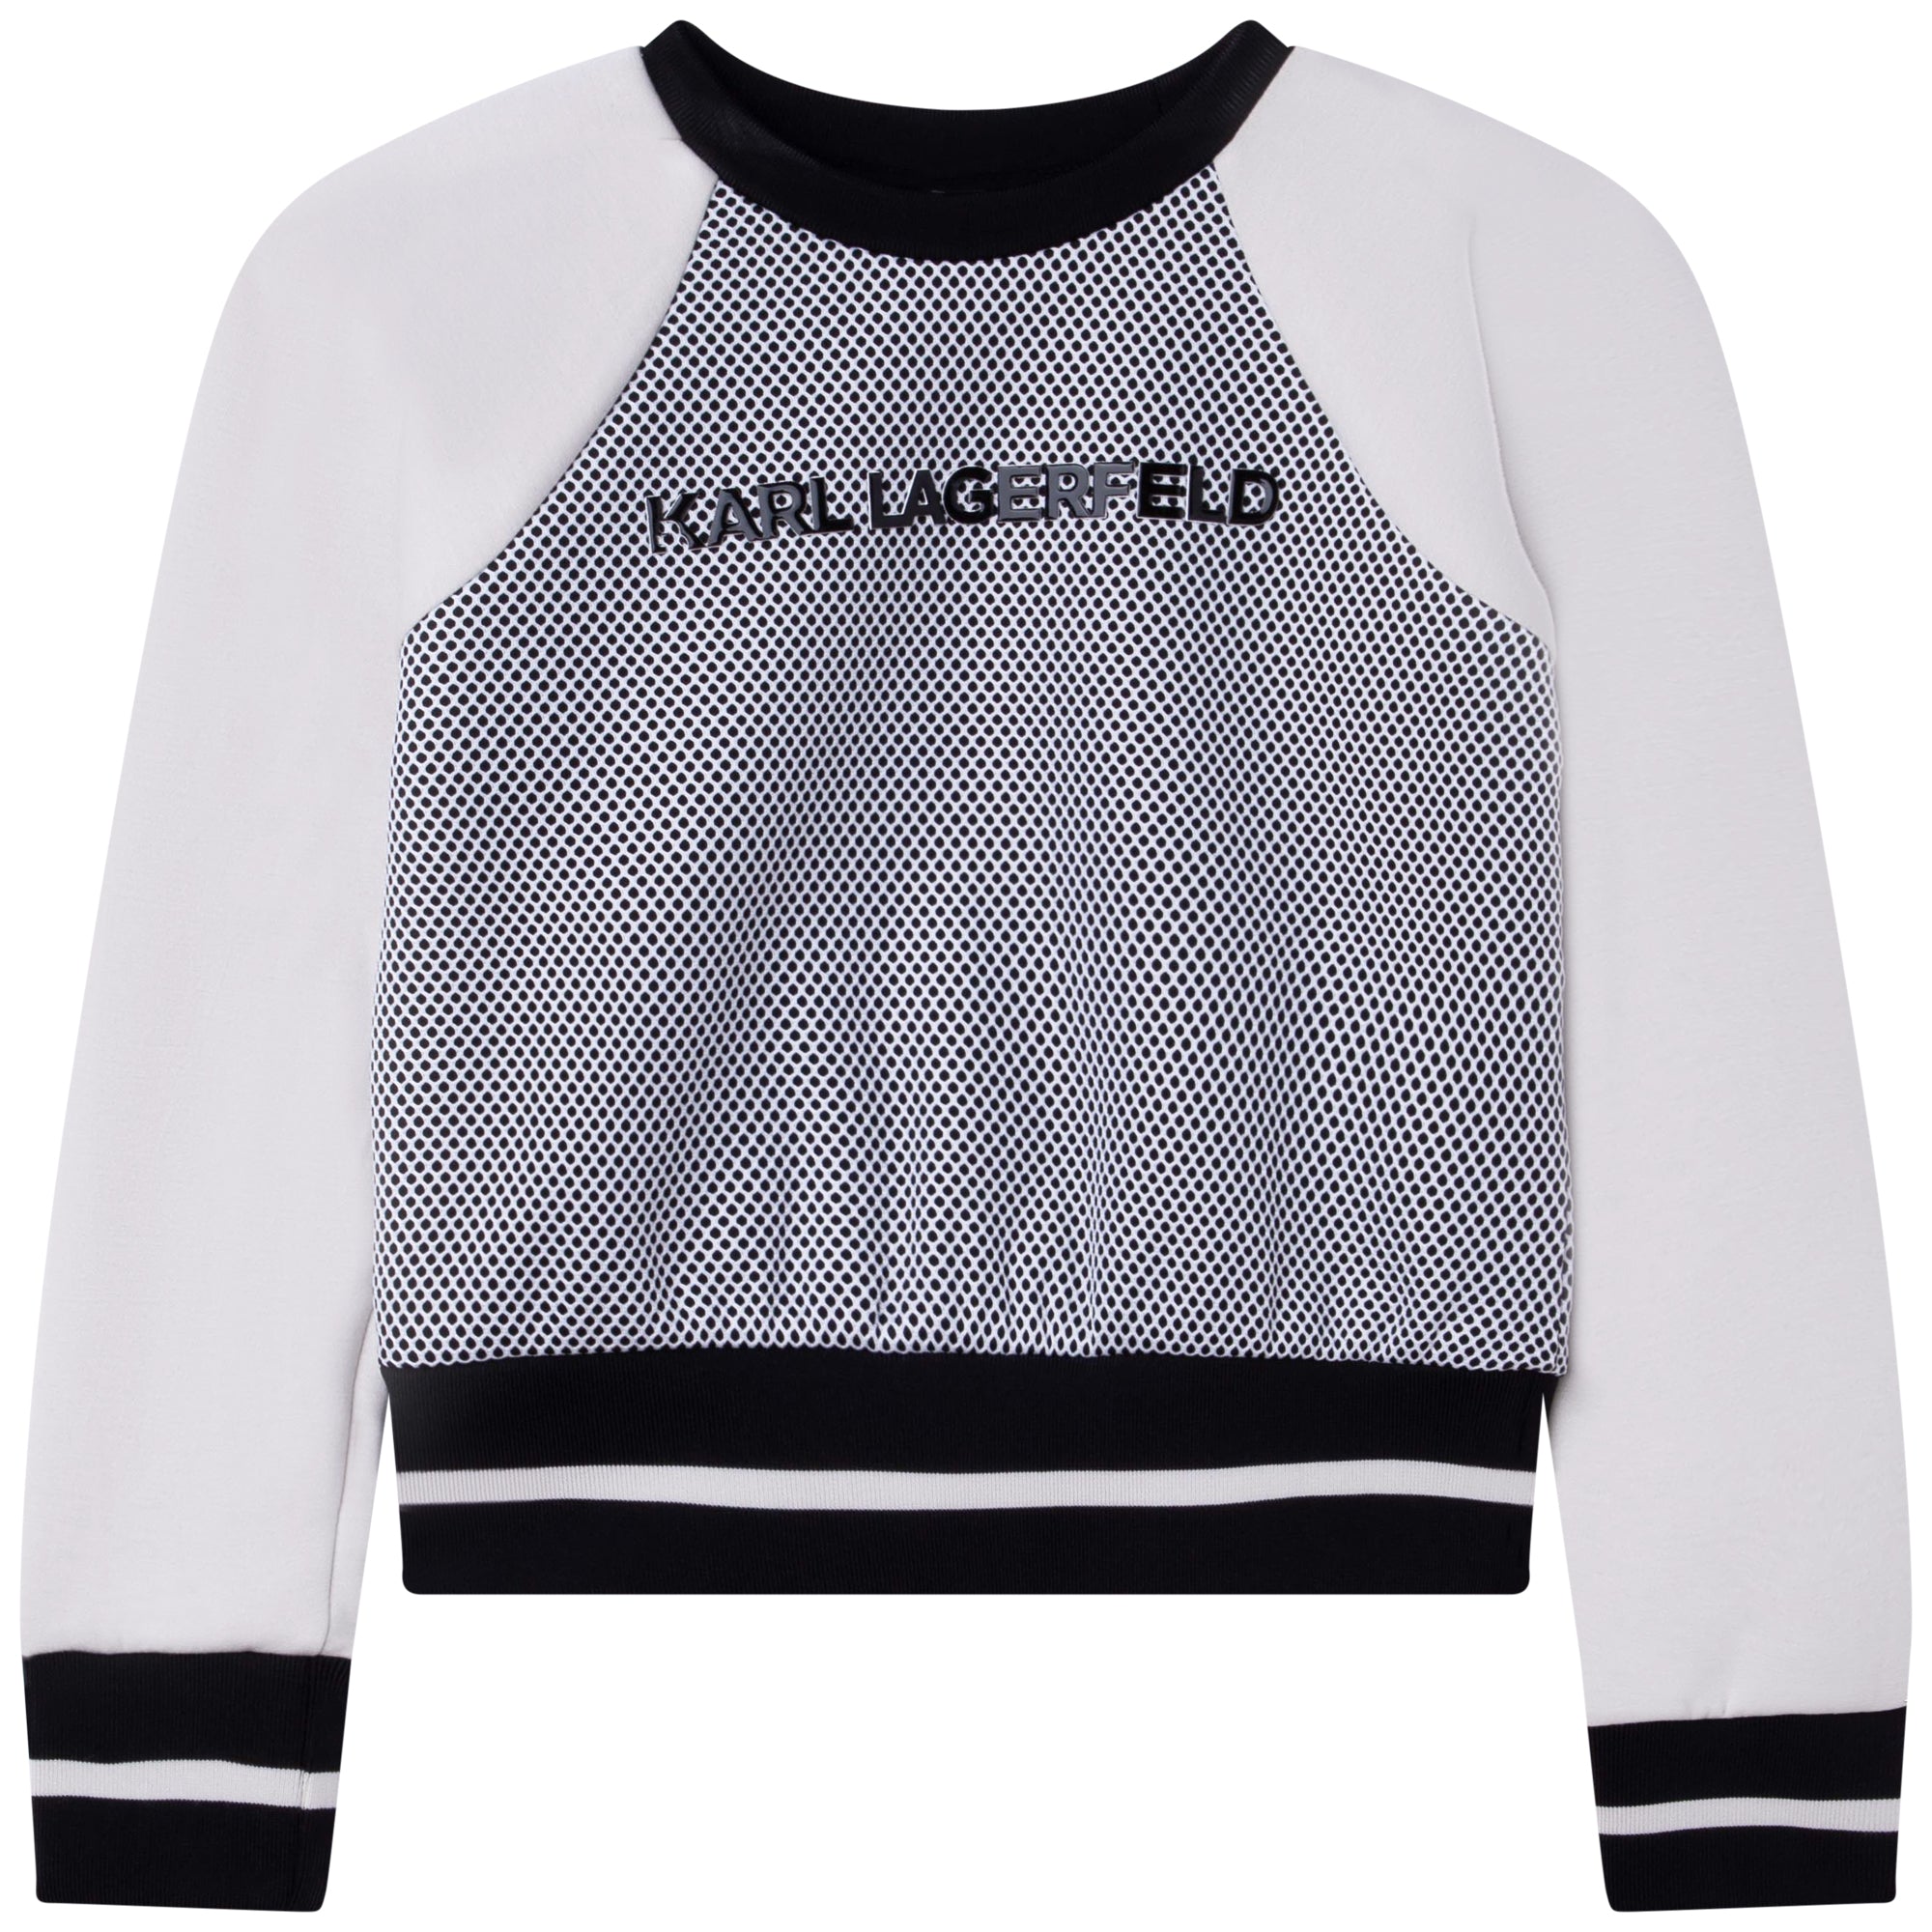 Karl Lagerfeld Mesh Sweatshirt